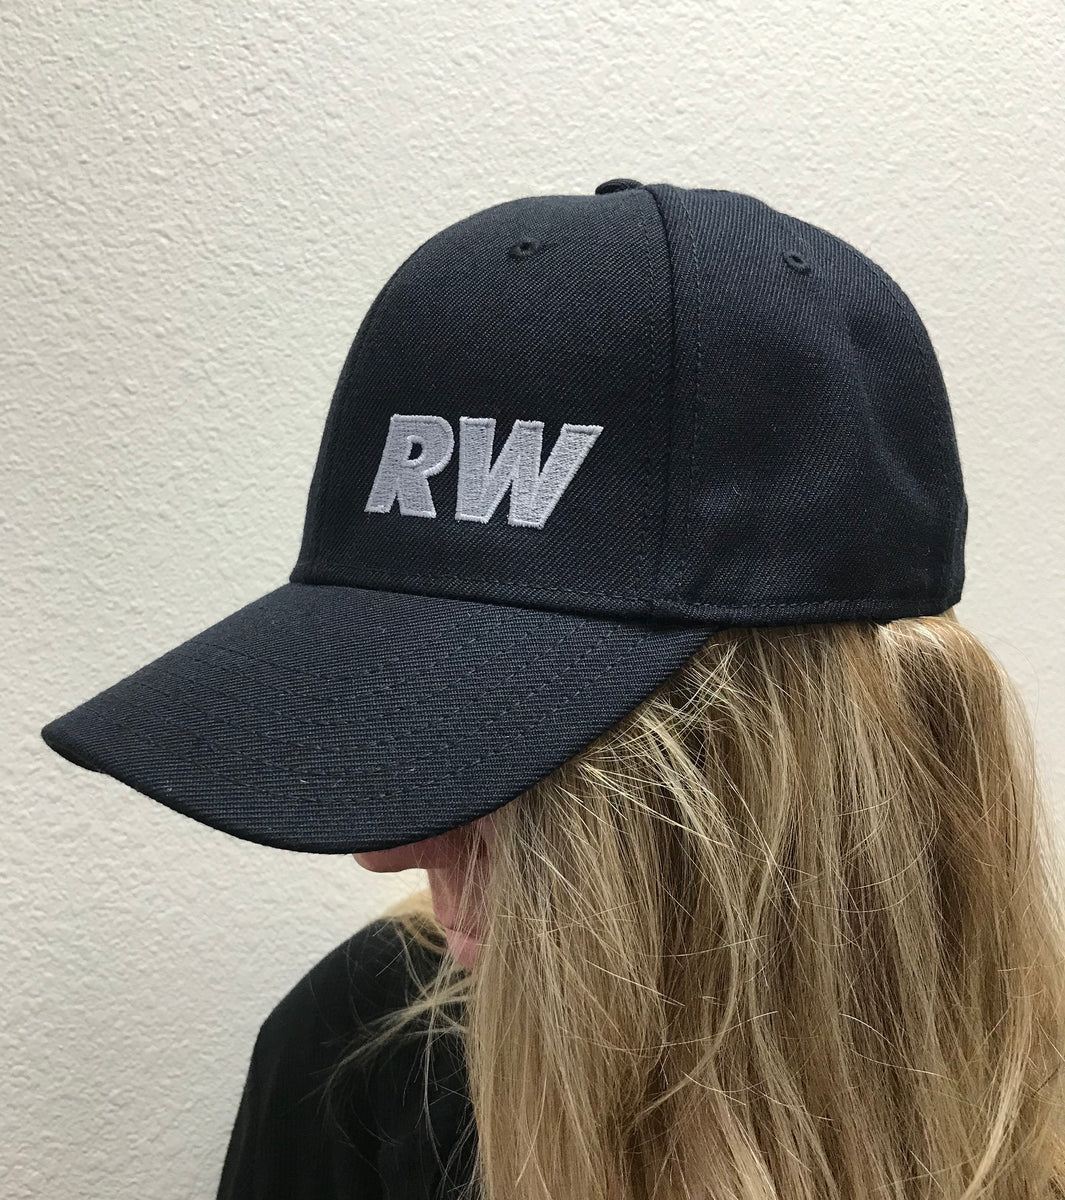 RW Black – World Roadracing Store Online Fit Flex Cap